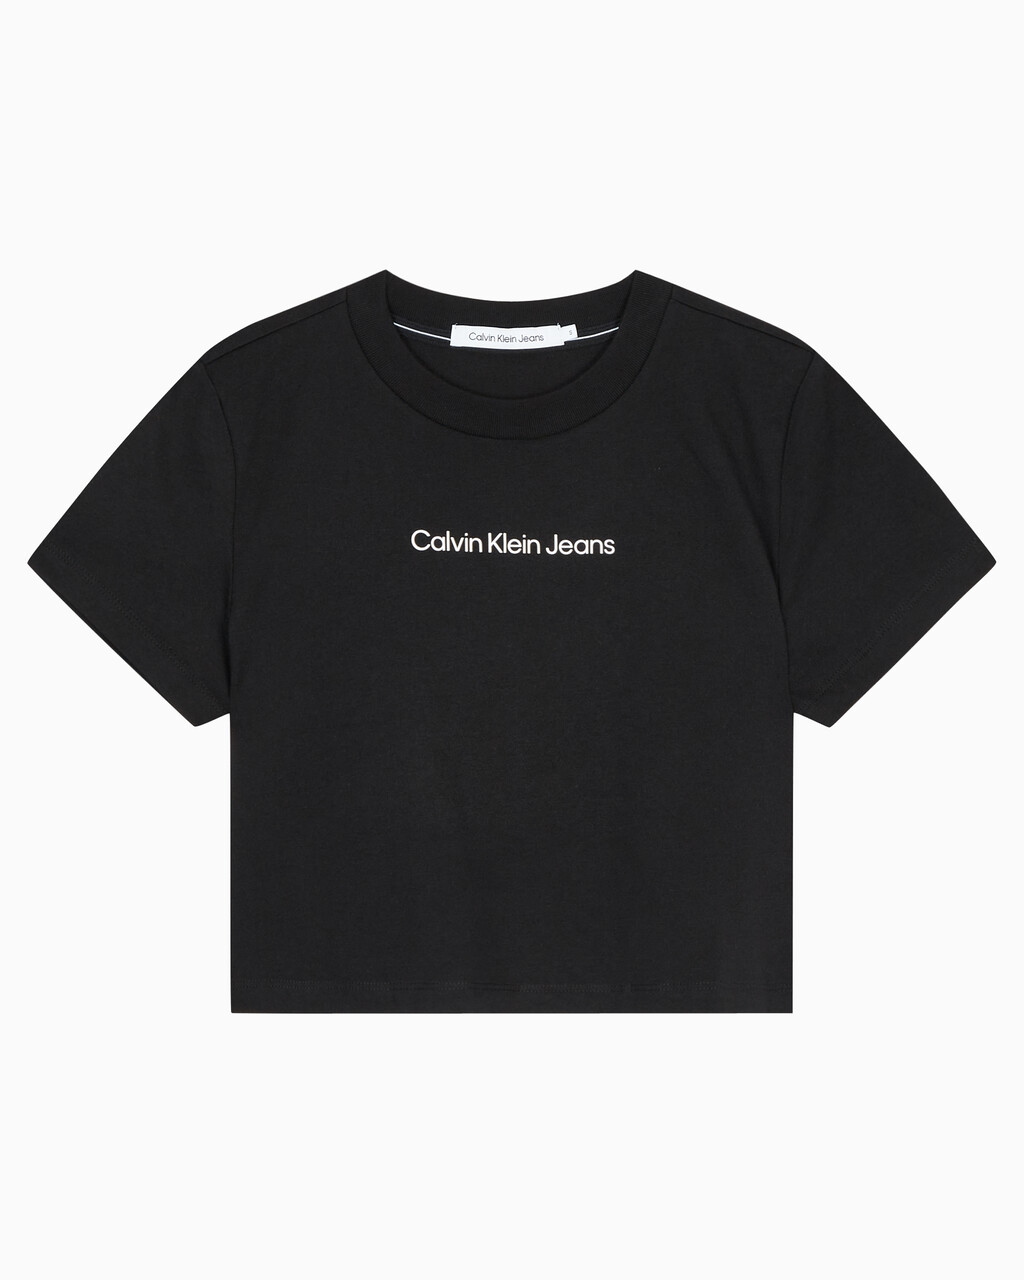 Buy 여성 레귤러핏 크롭 로고 반팔 티셔츠 in color CK BLACK